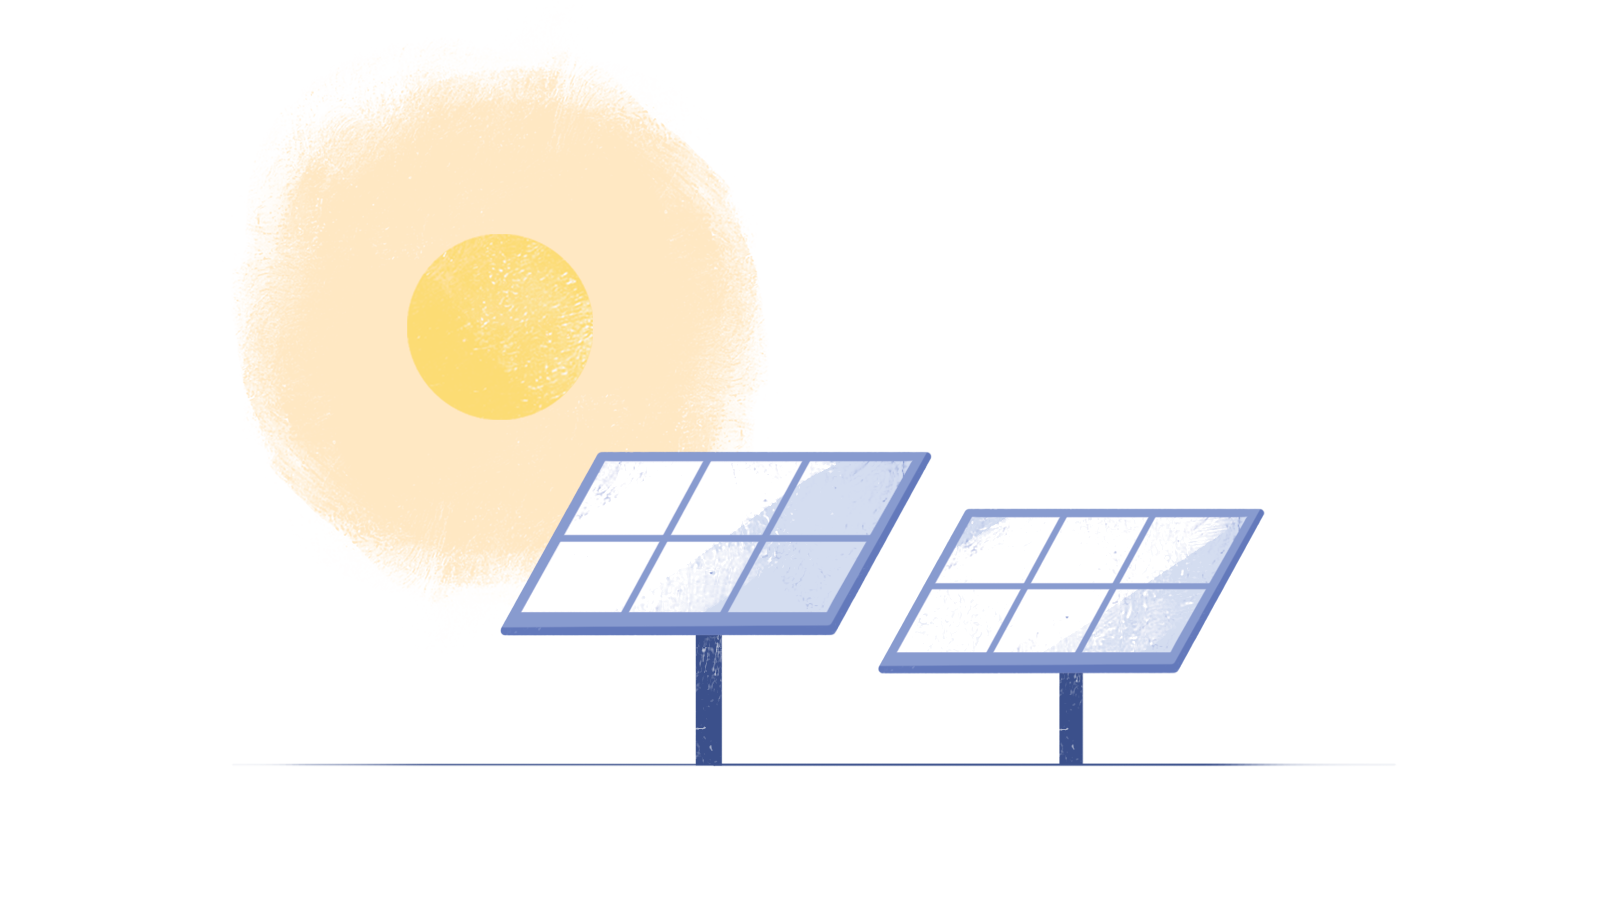 SAT - 50% solar power